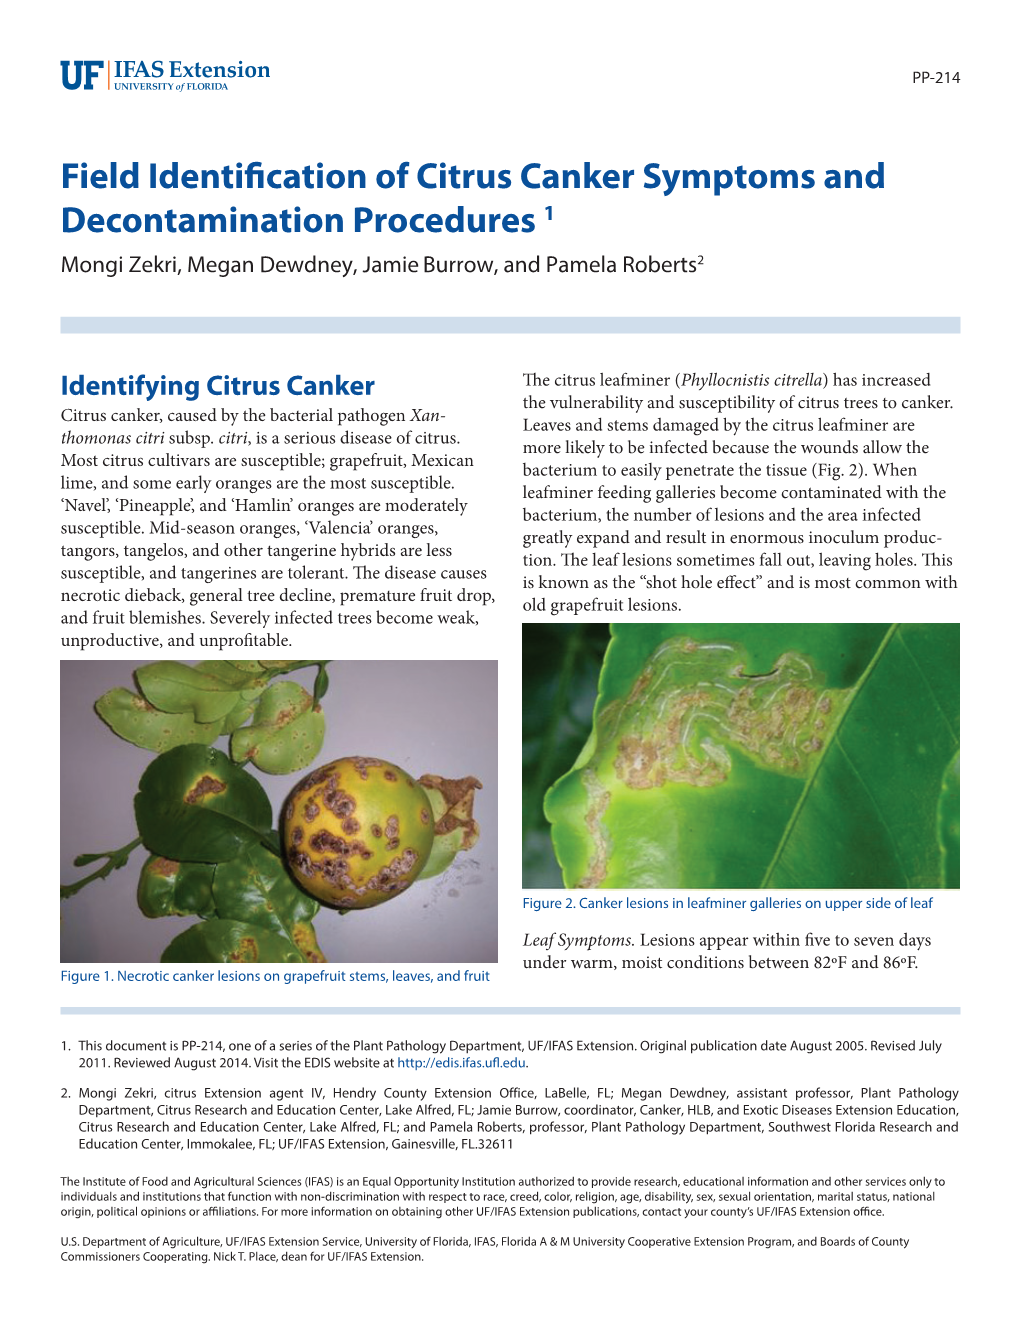 Field Identification of Citrus Canker Symptoms and Decontamination Procedures 1 Mongi Zekri, Megan Dewdney, Jamie Burrow, and Pamela Roberts2